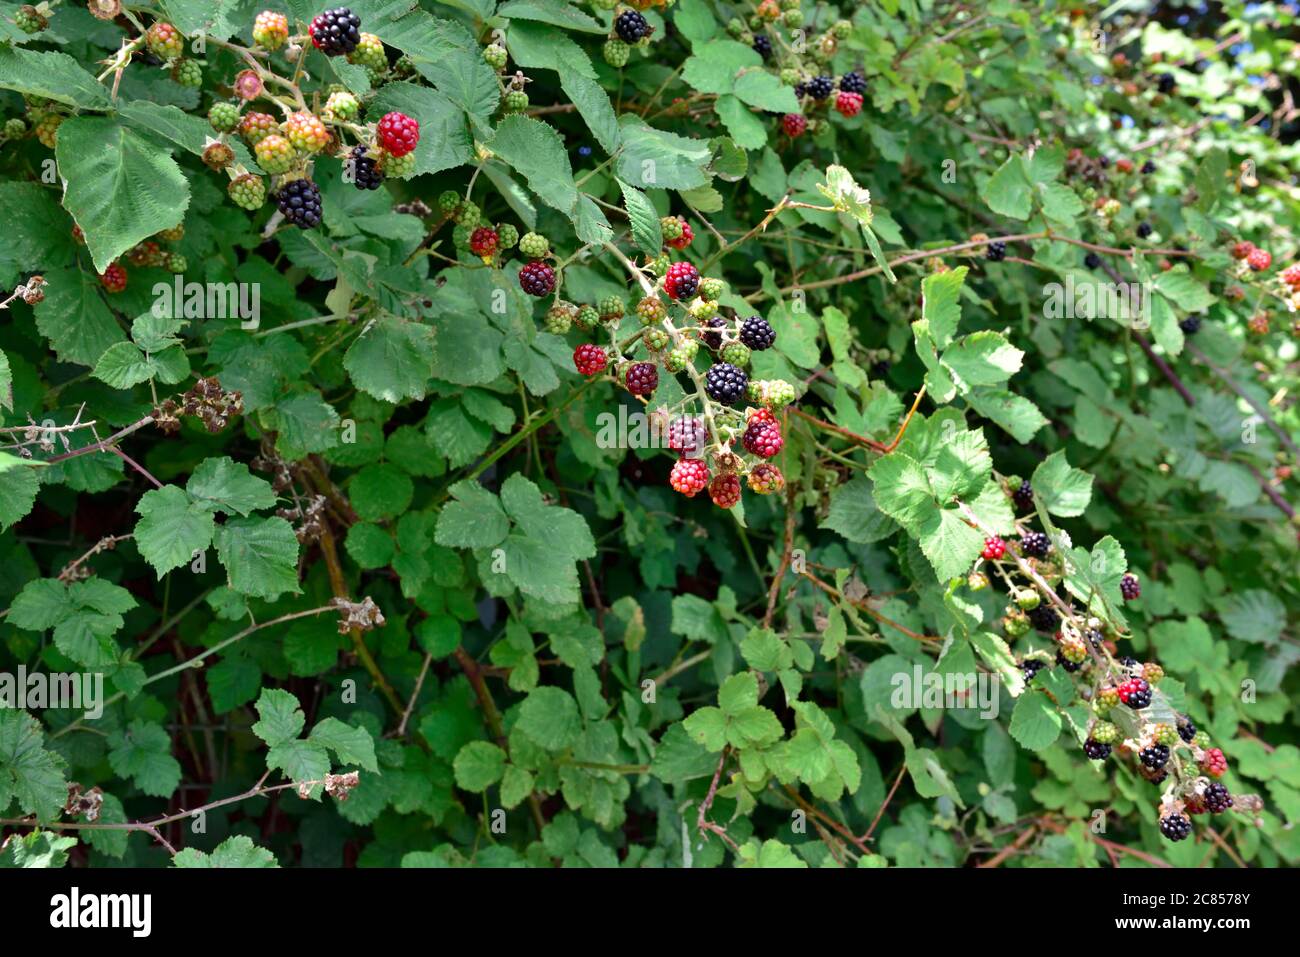 Wild bramble bush with unripe and ripe blackberries growing Stock Photo